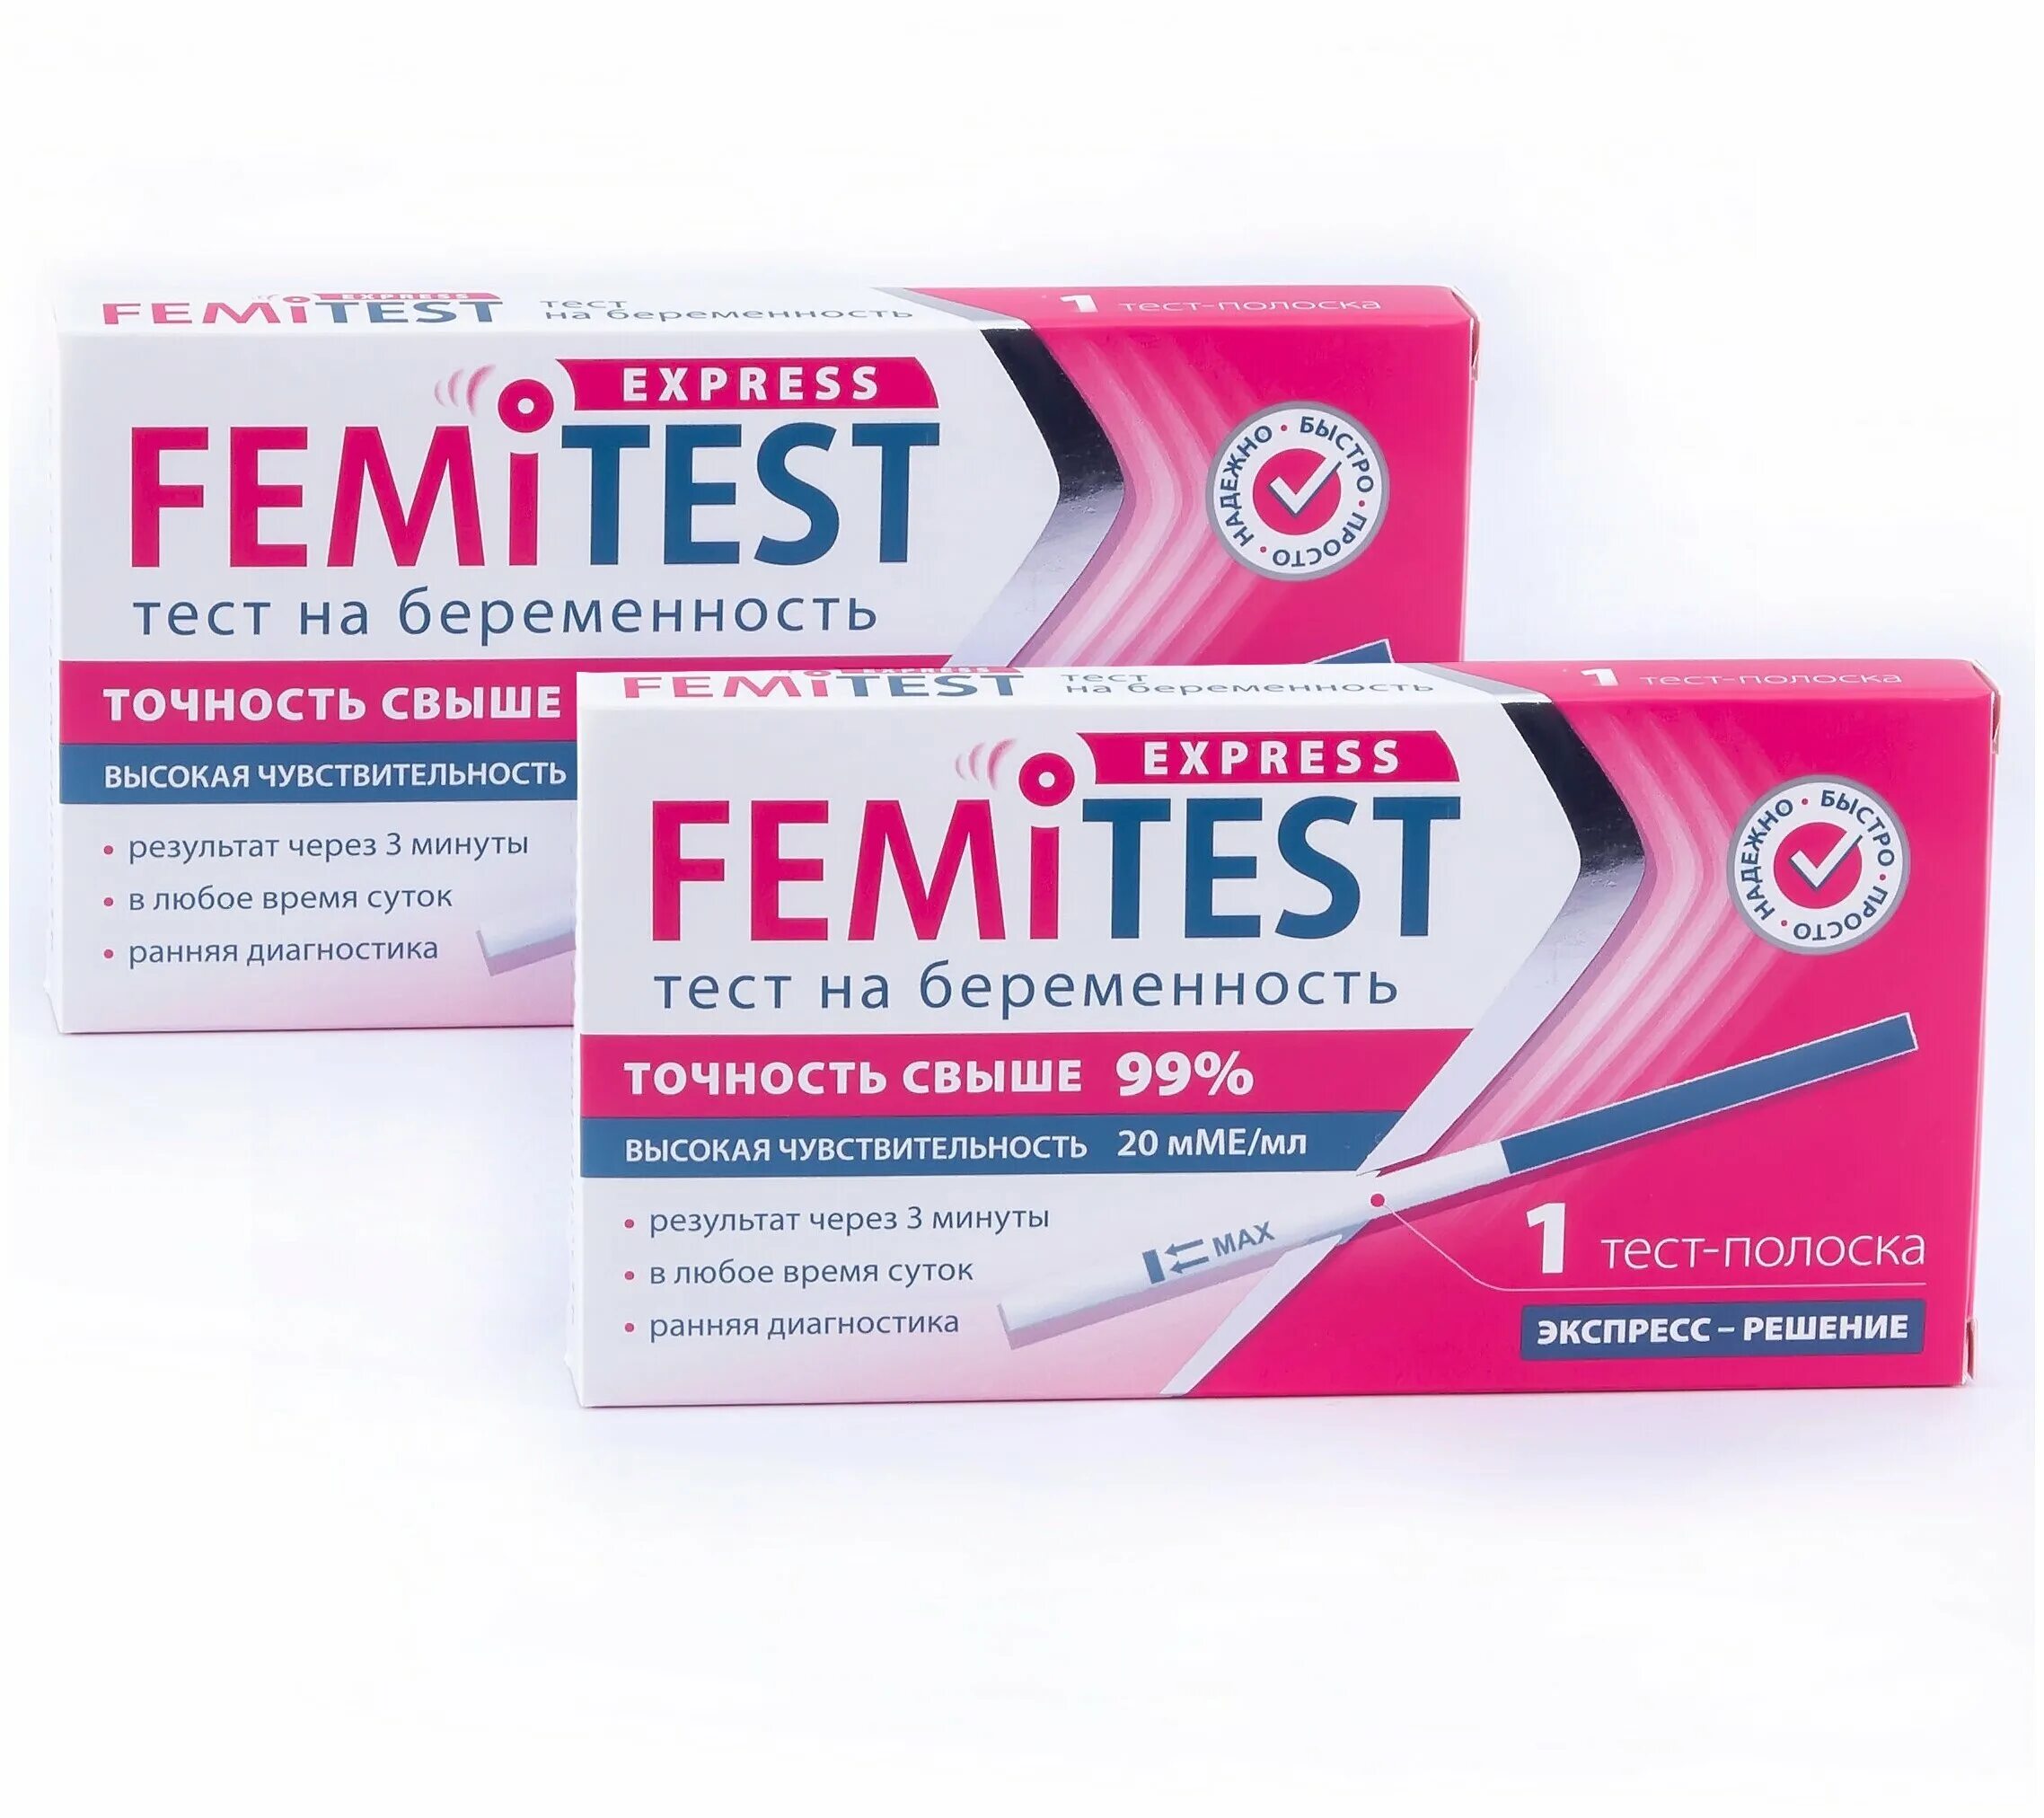 Тест femitest отзывы. Femitest Ultra с чувствительностью 10 ММЕ/мл. Тест полоска femitest. ФЕМИТЕСТ экспресс. Экспресс тест на панлейкопению.